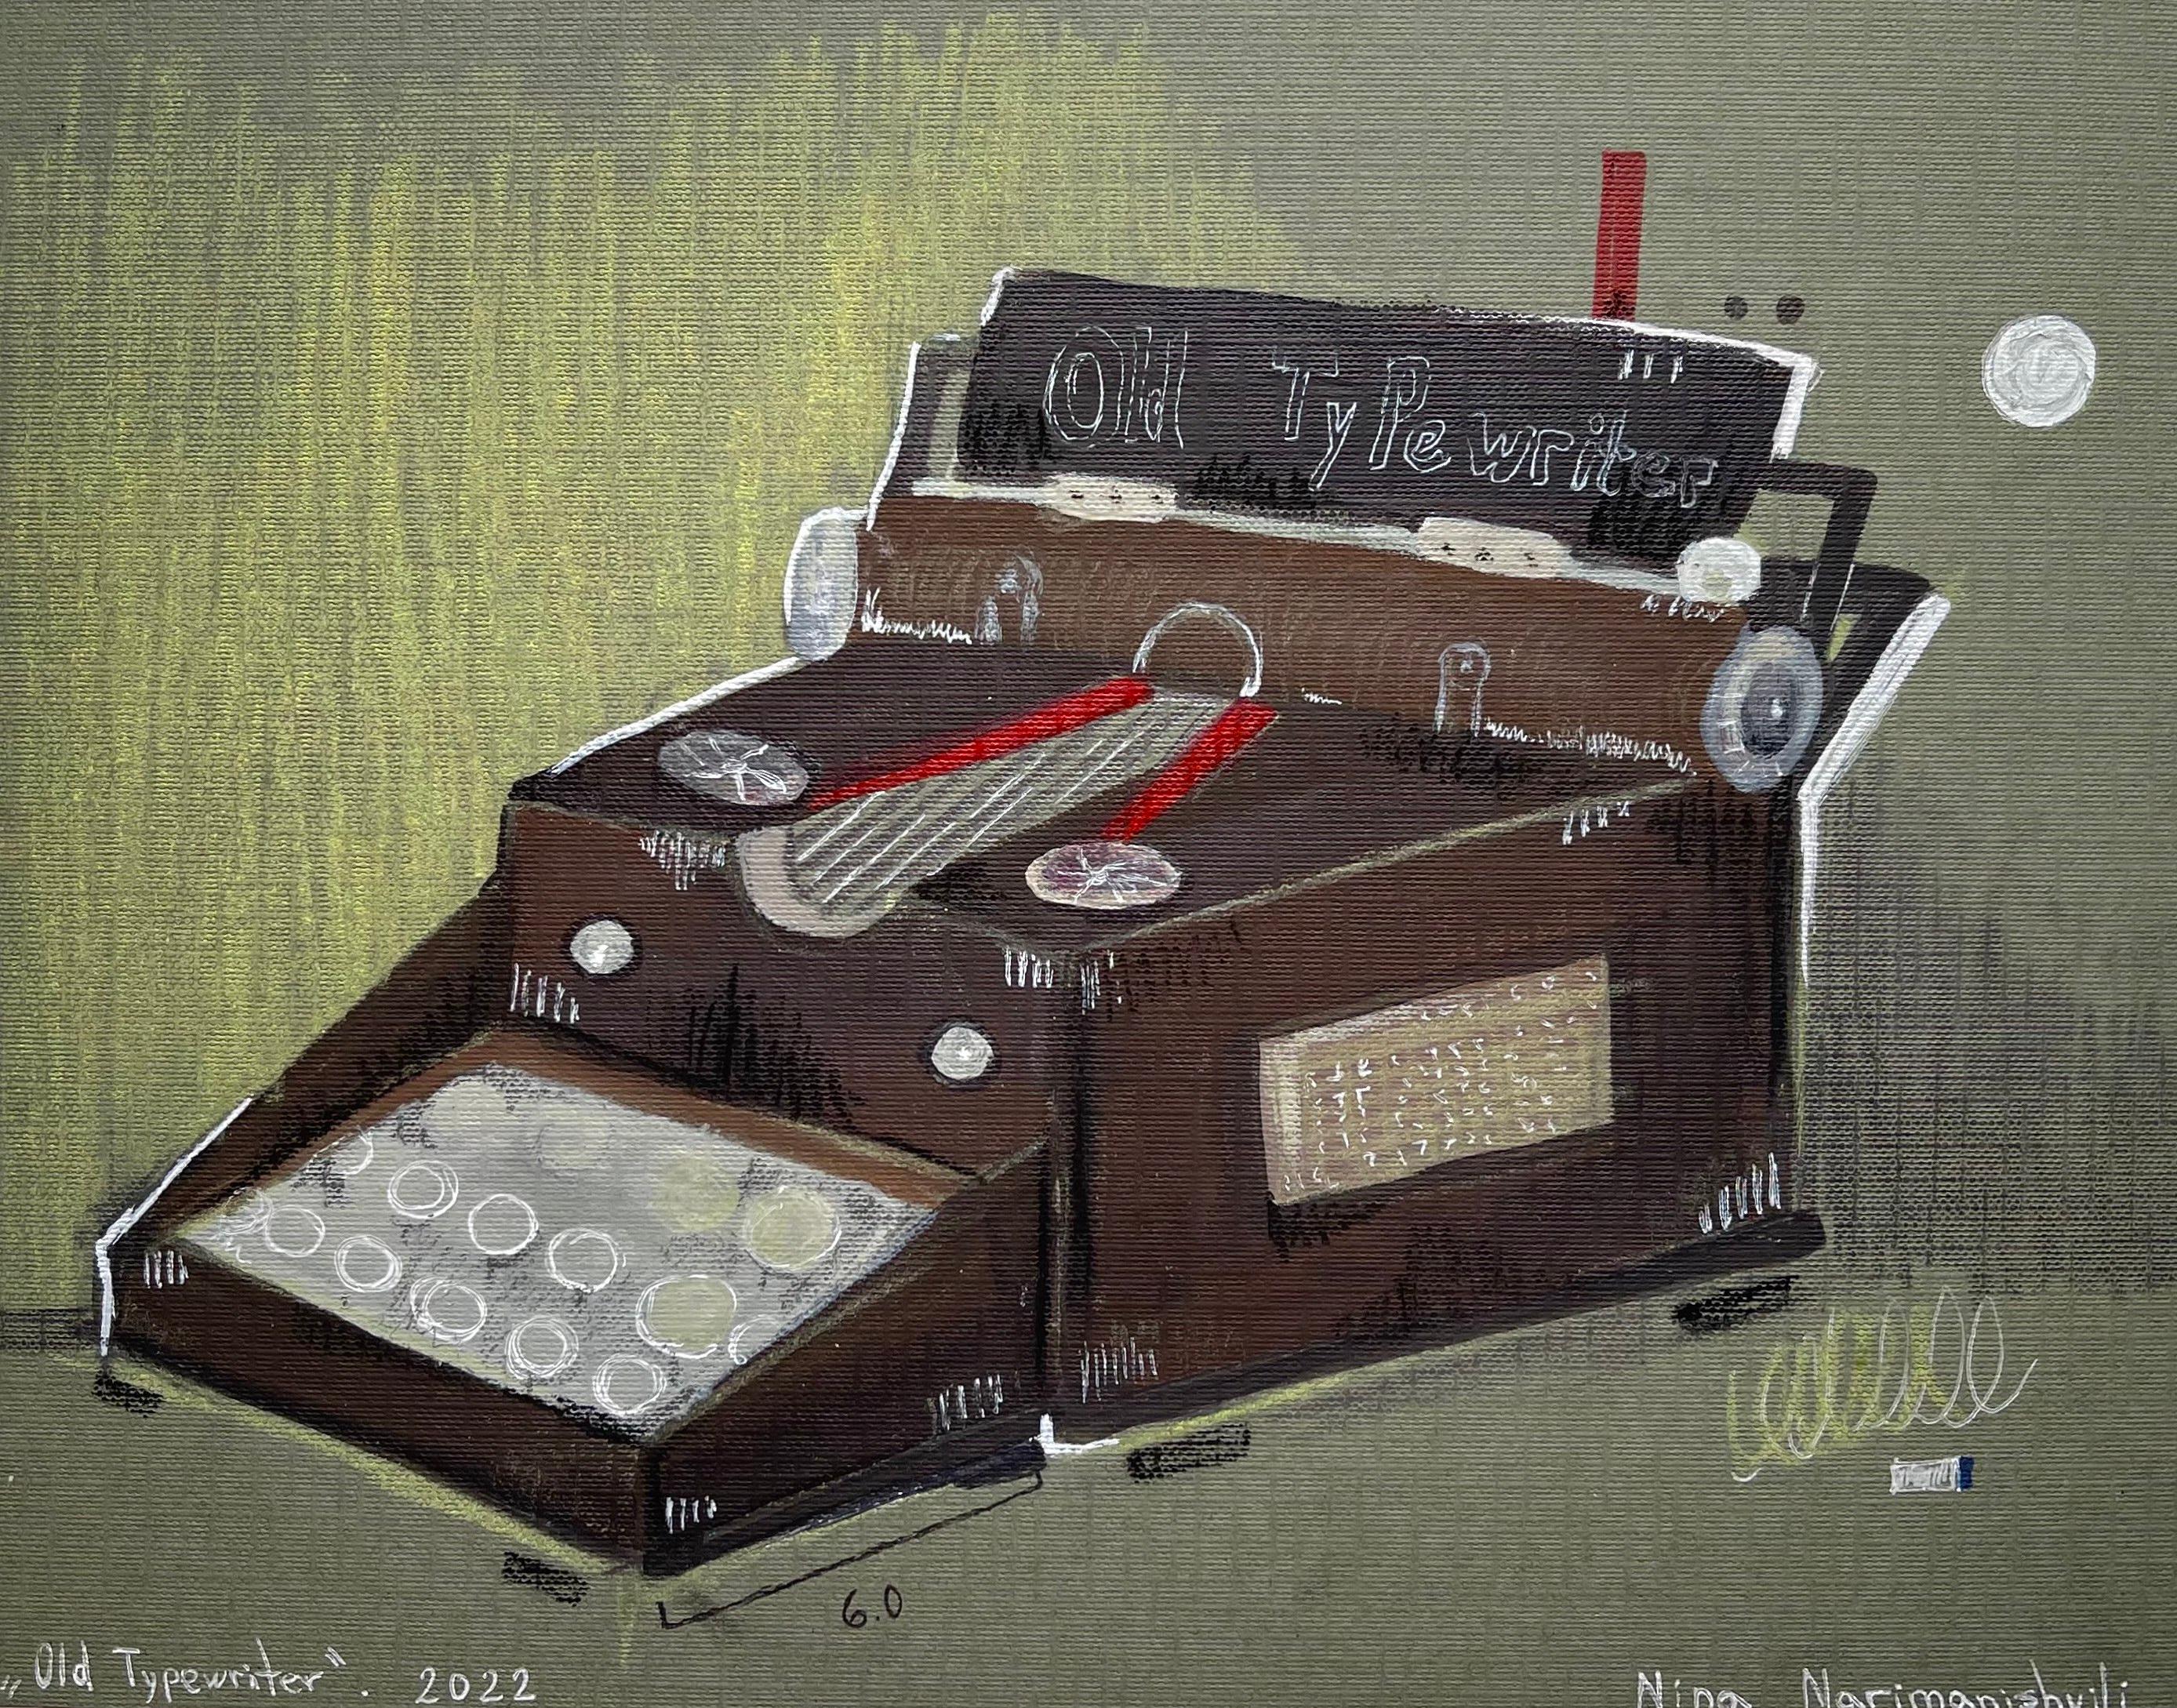 Georgian Contemporary Art by Nina Narimanishvili - Old Typewriter 